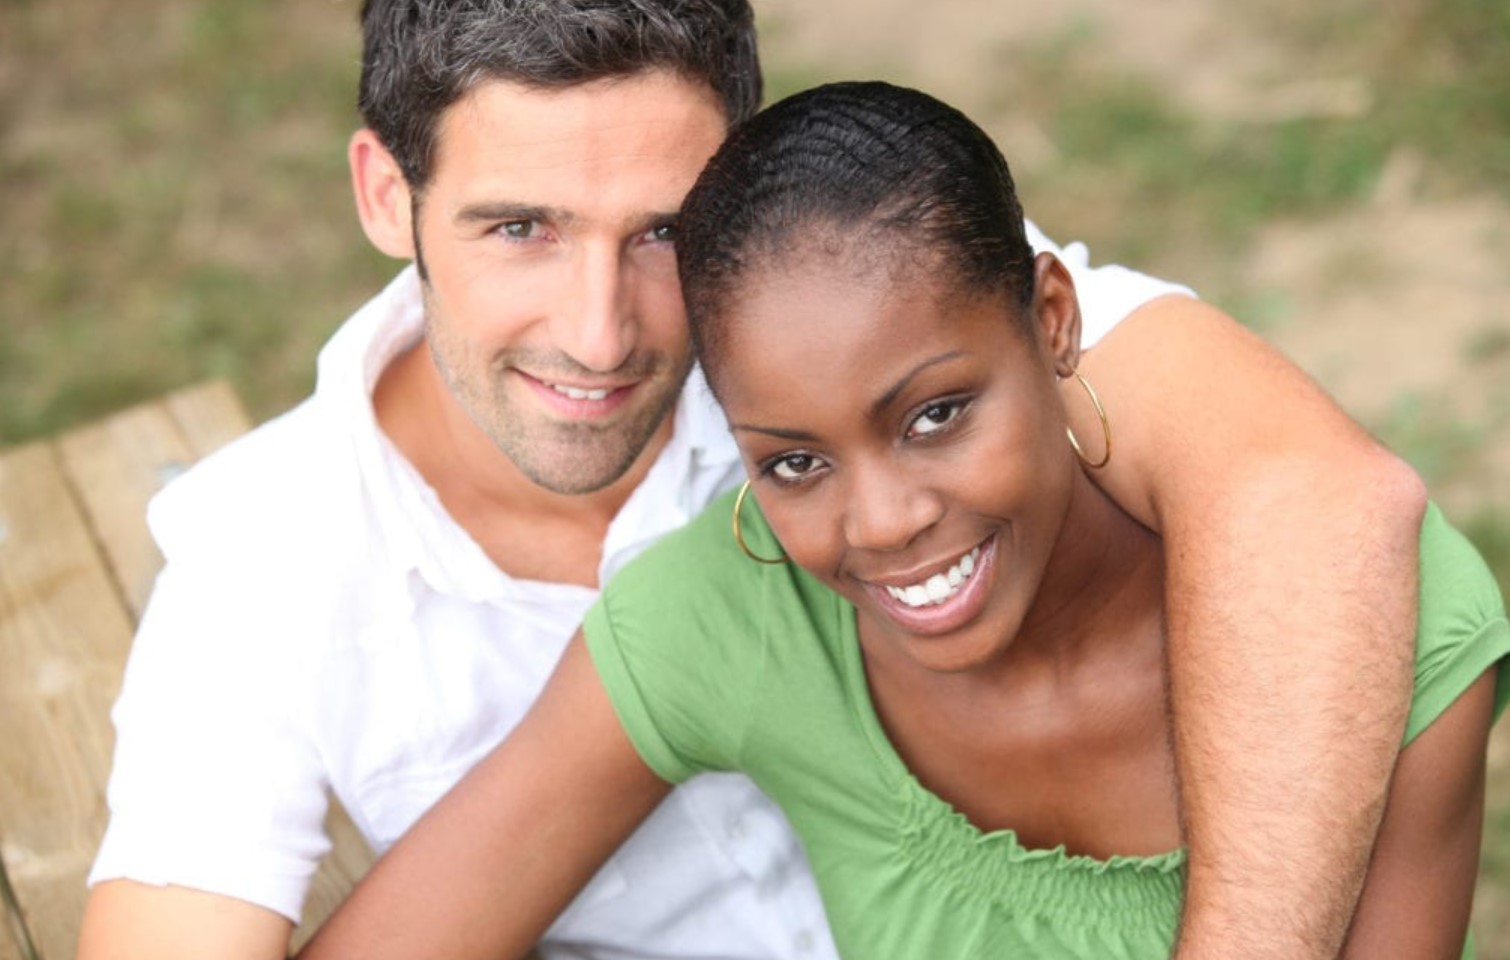 Interracial Dating